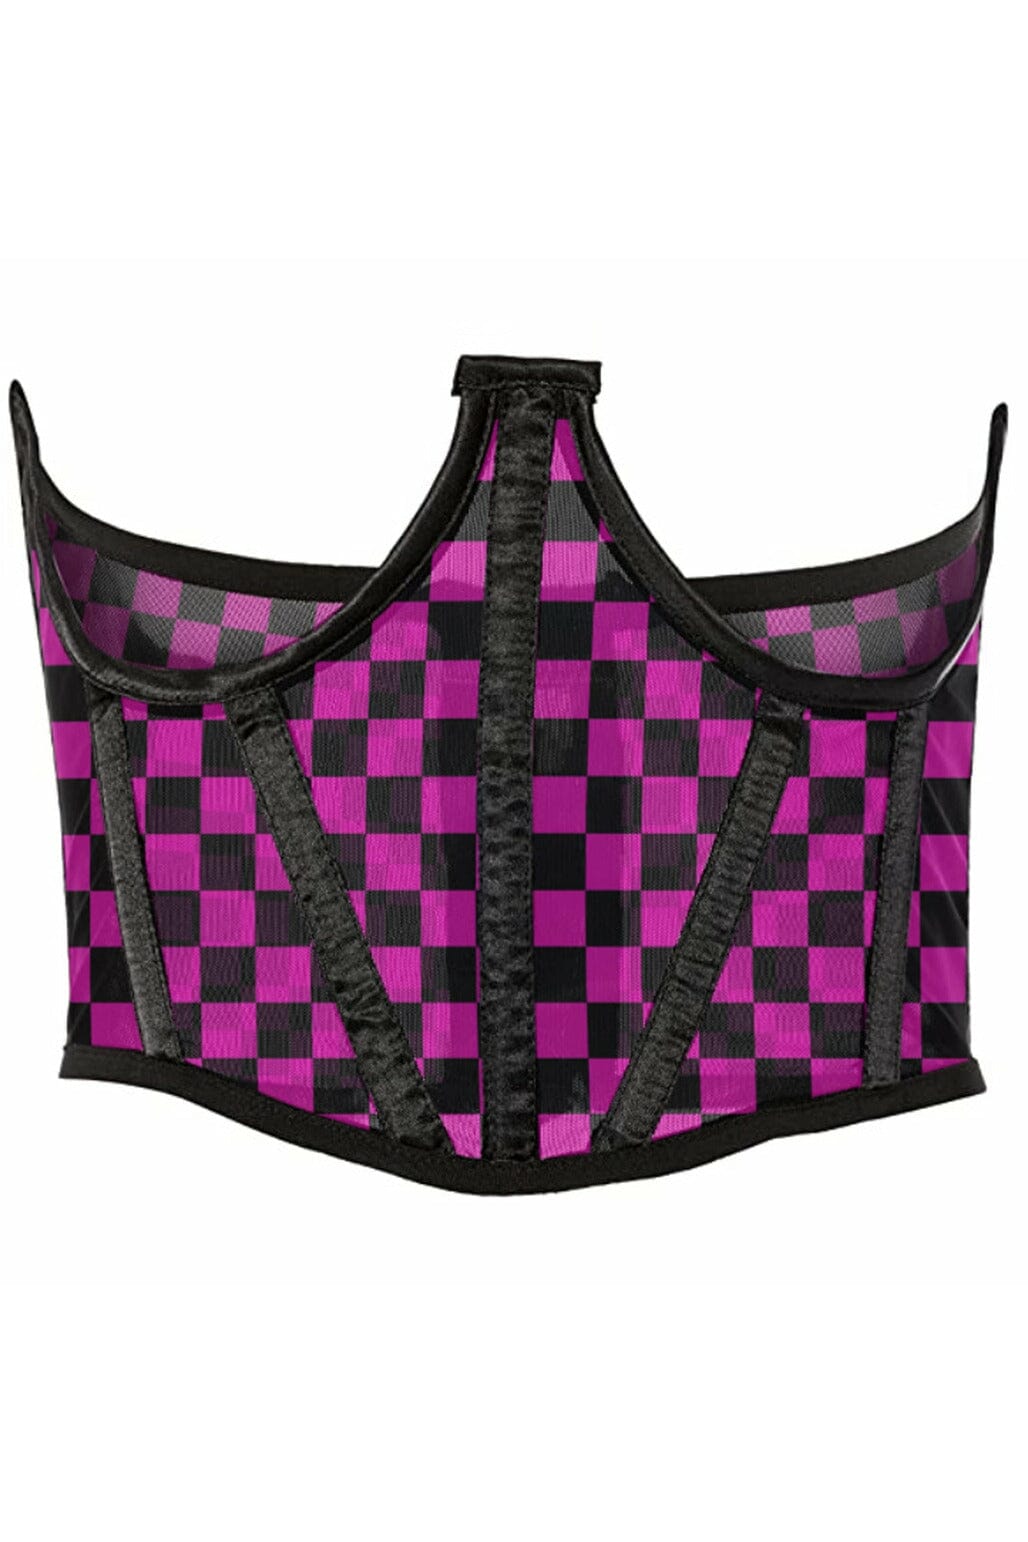 Lavish Neon Pink/Black Checker Print Mesh Open Cup Waist Cincher-Waist Cinchers-Daisy Corsets-Pink-S-SEXYSHOES.COM